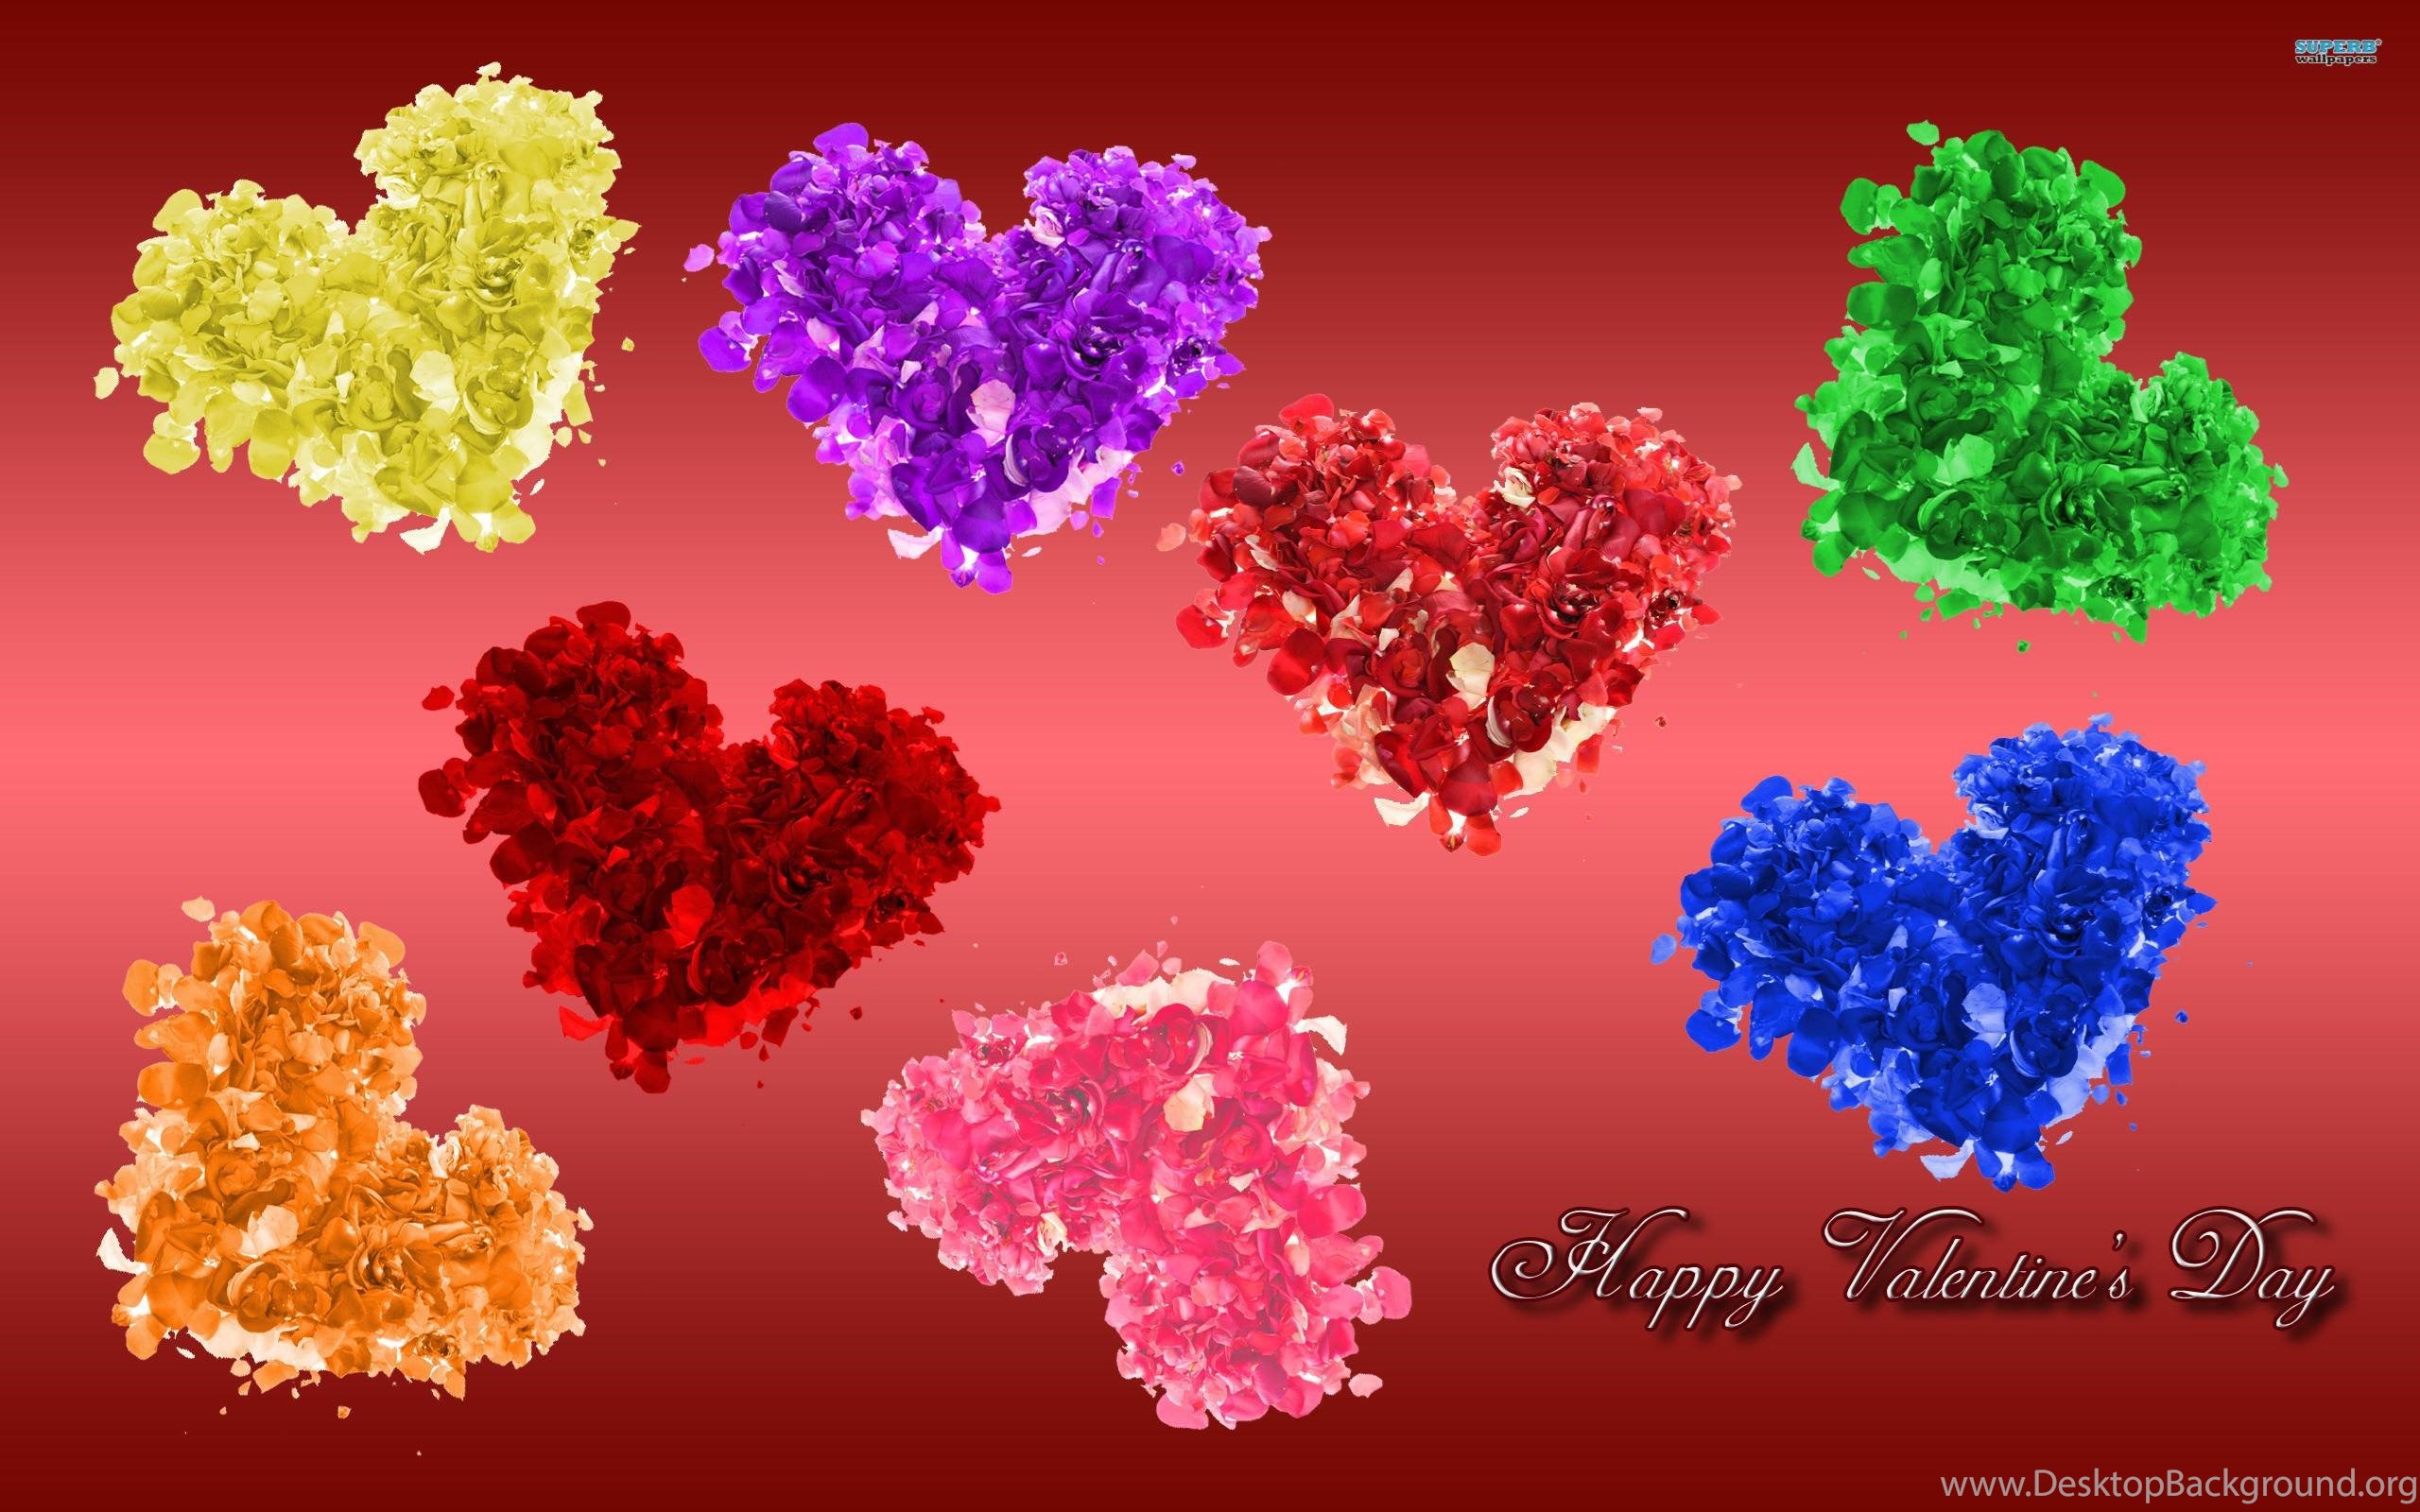 Valentine's Day Colorful Wallpaper Desktop Background